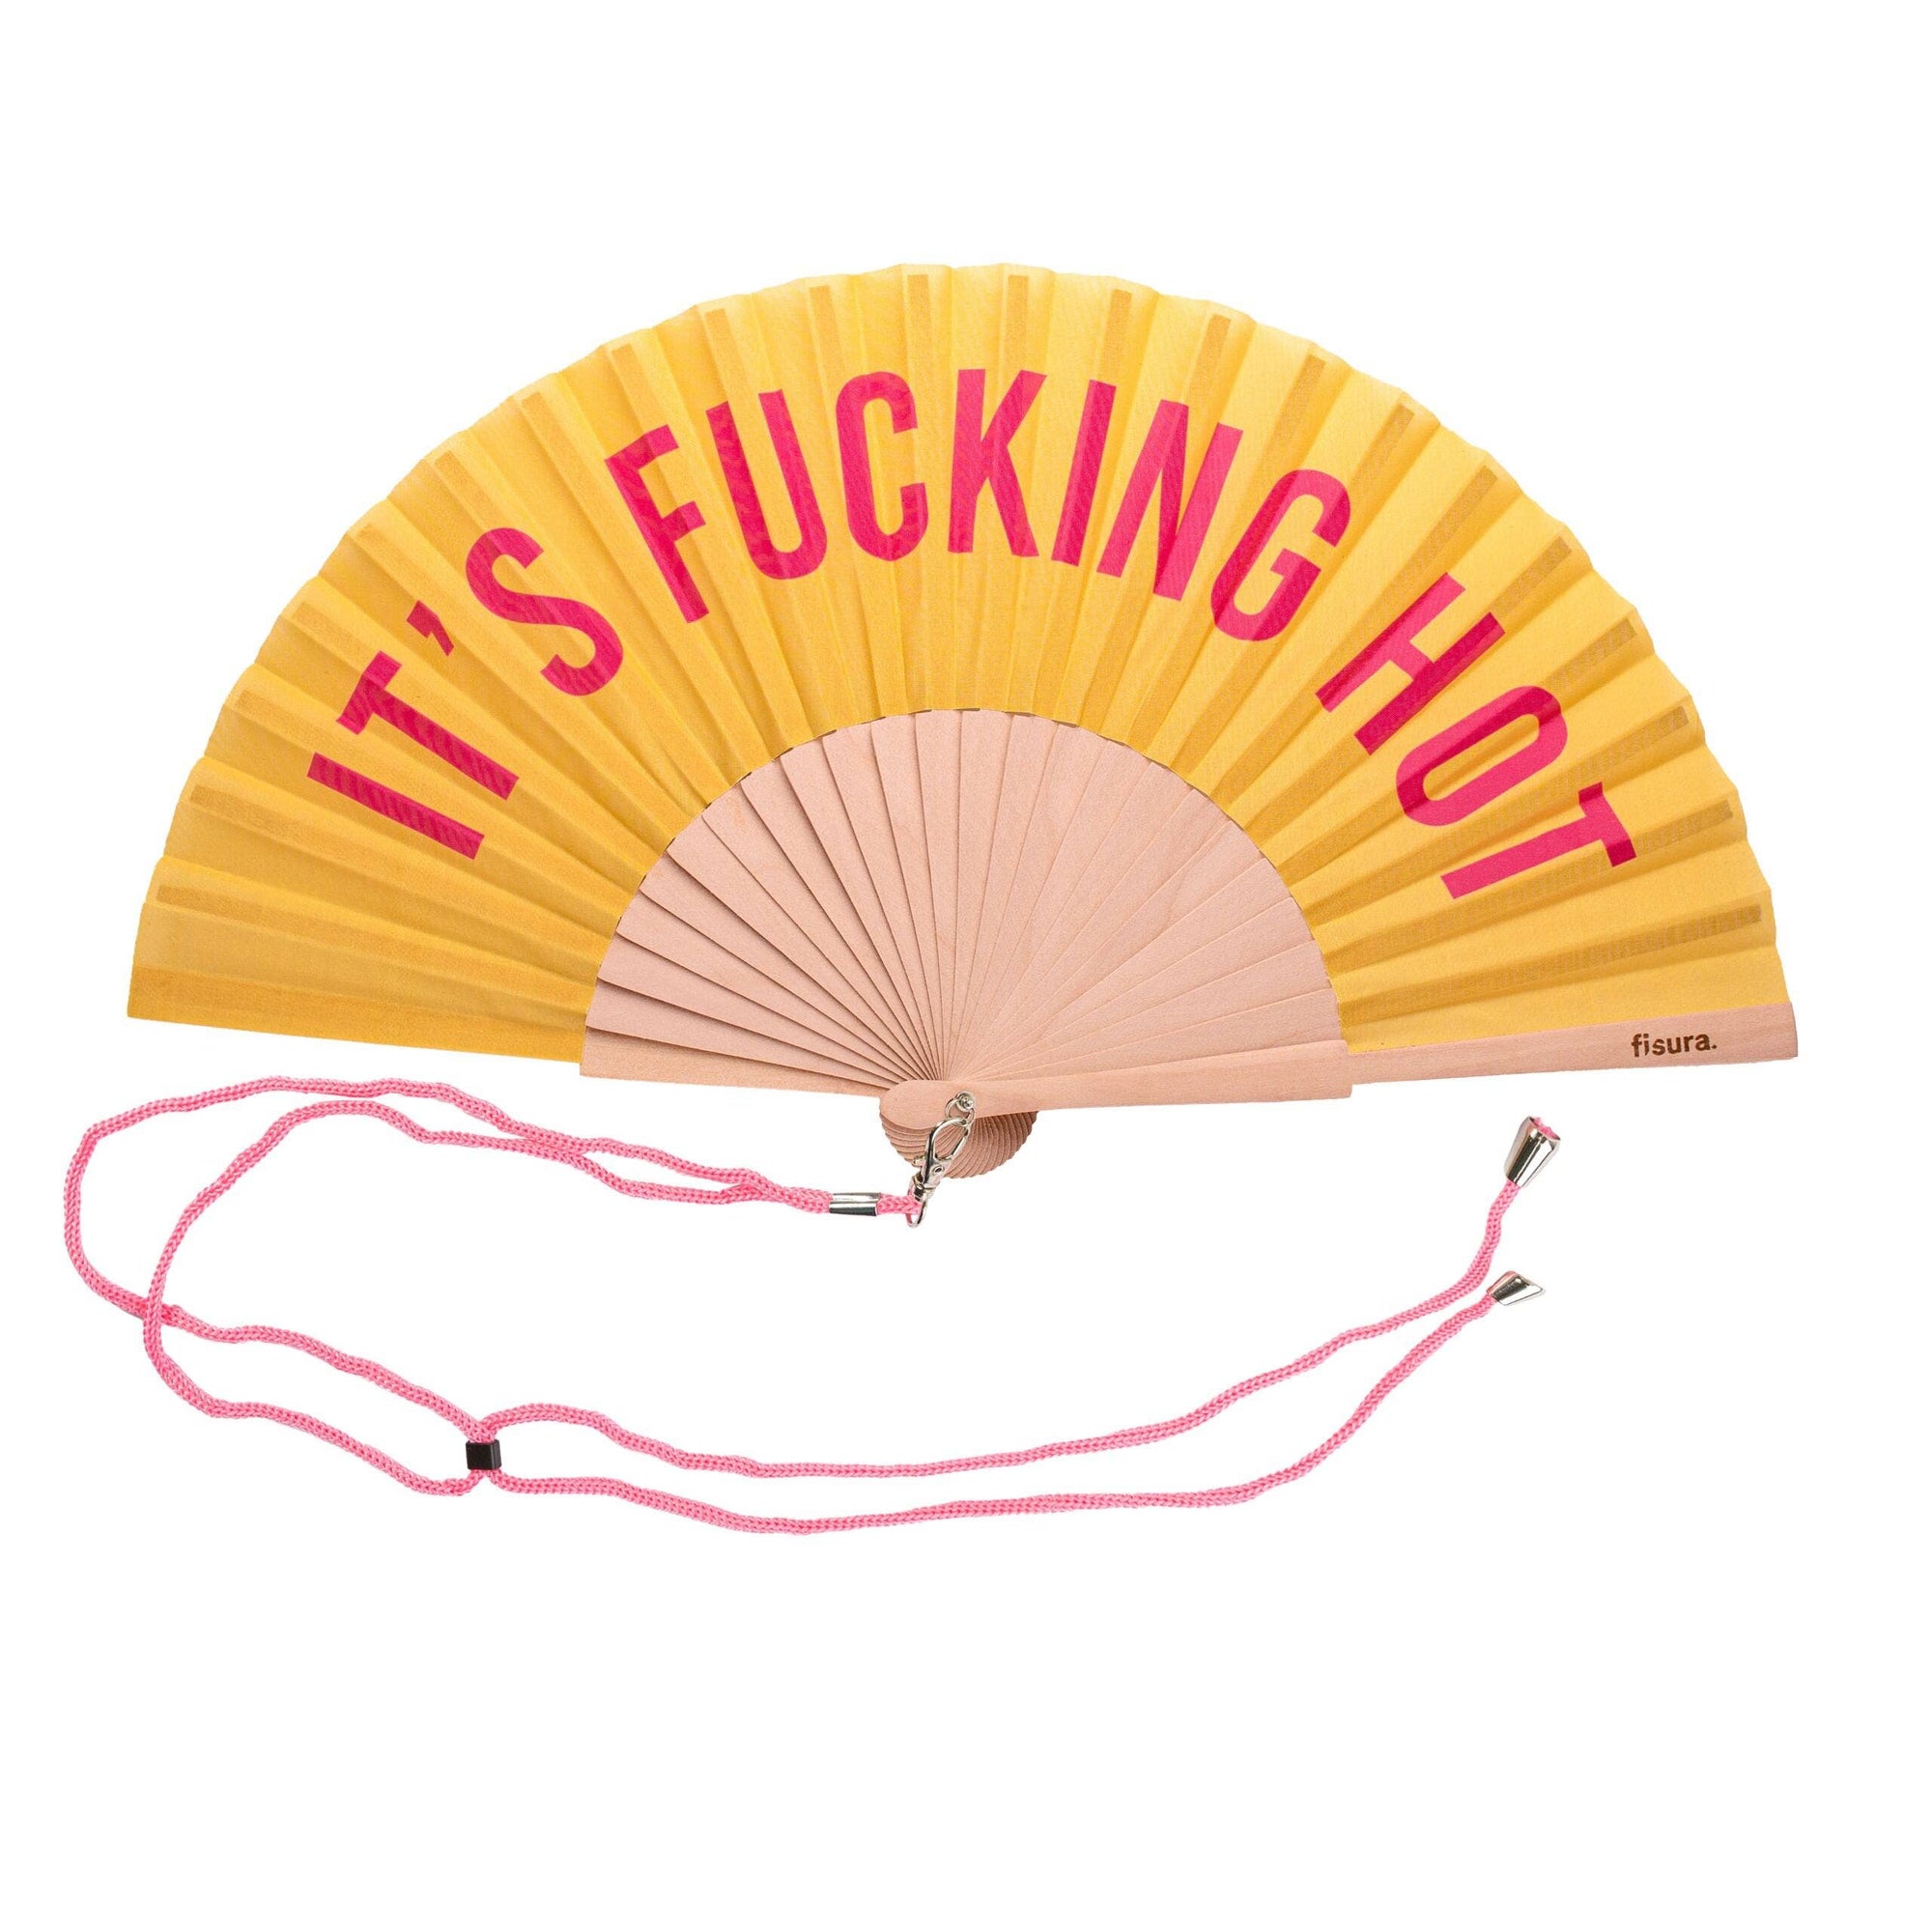 “Fucking Hot” yellow and pink fan.